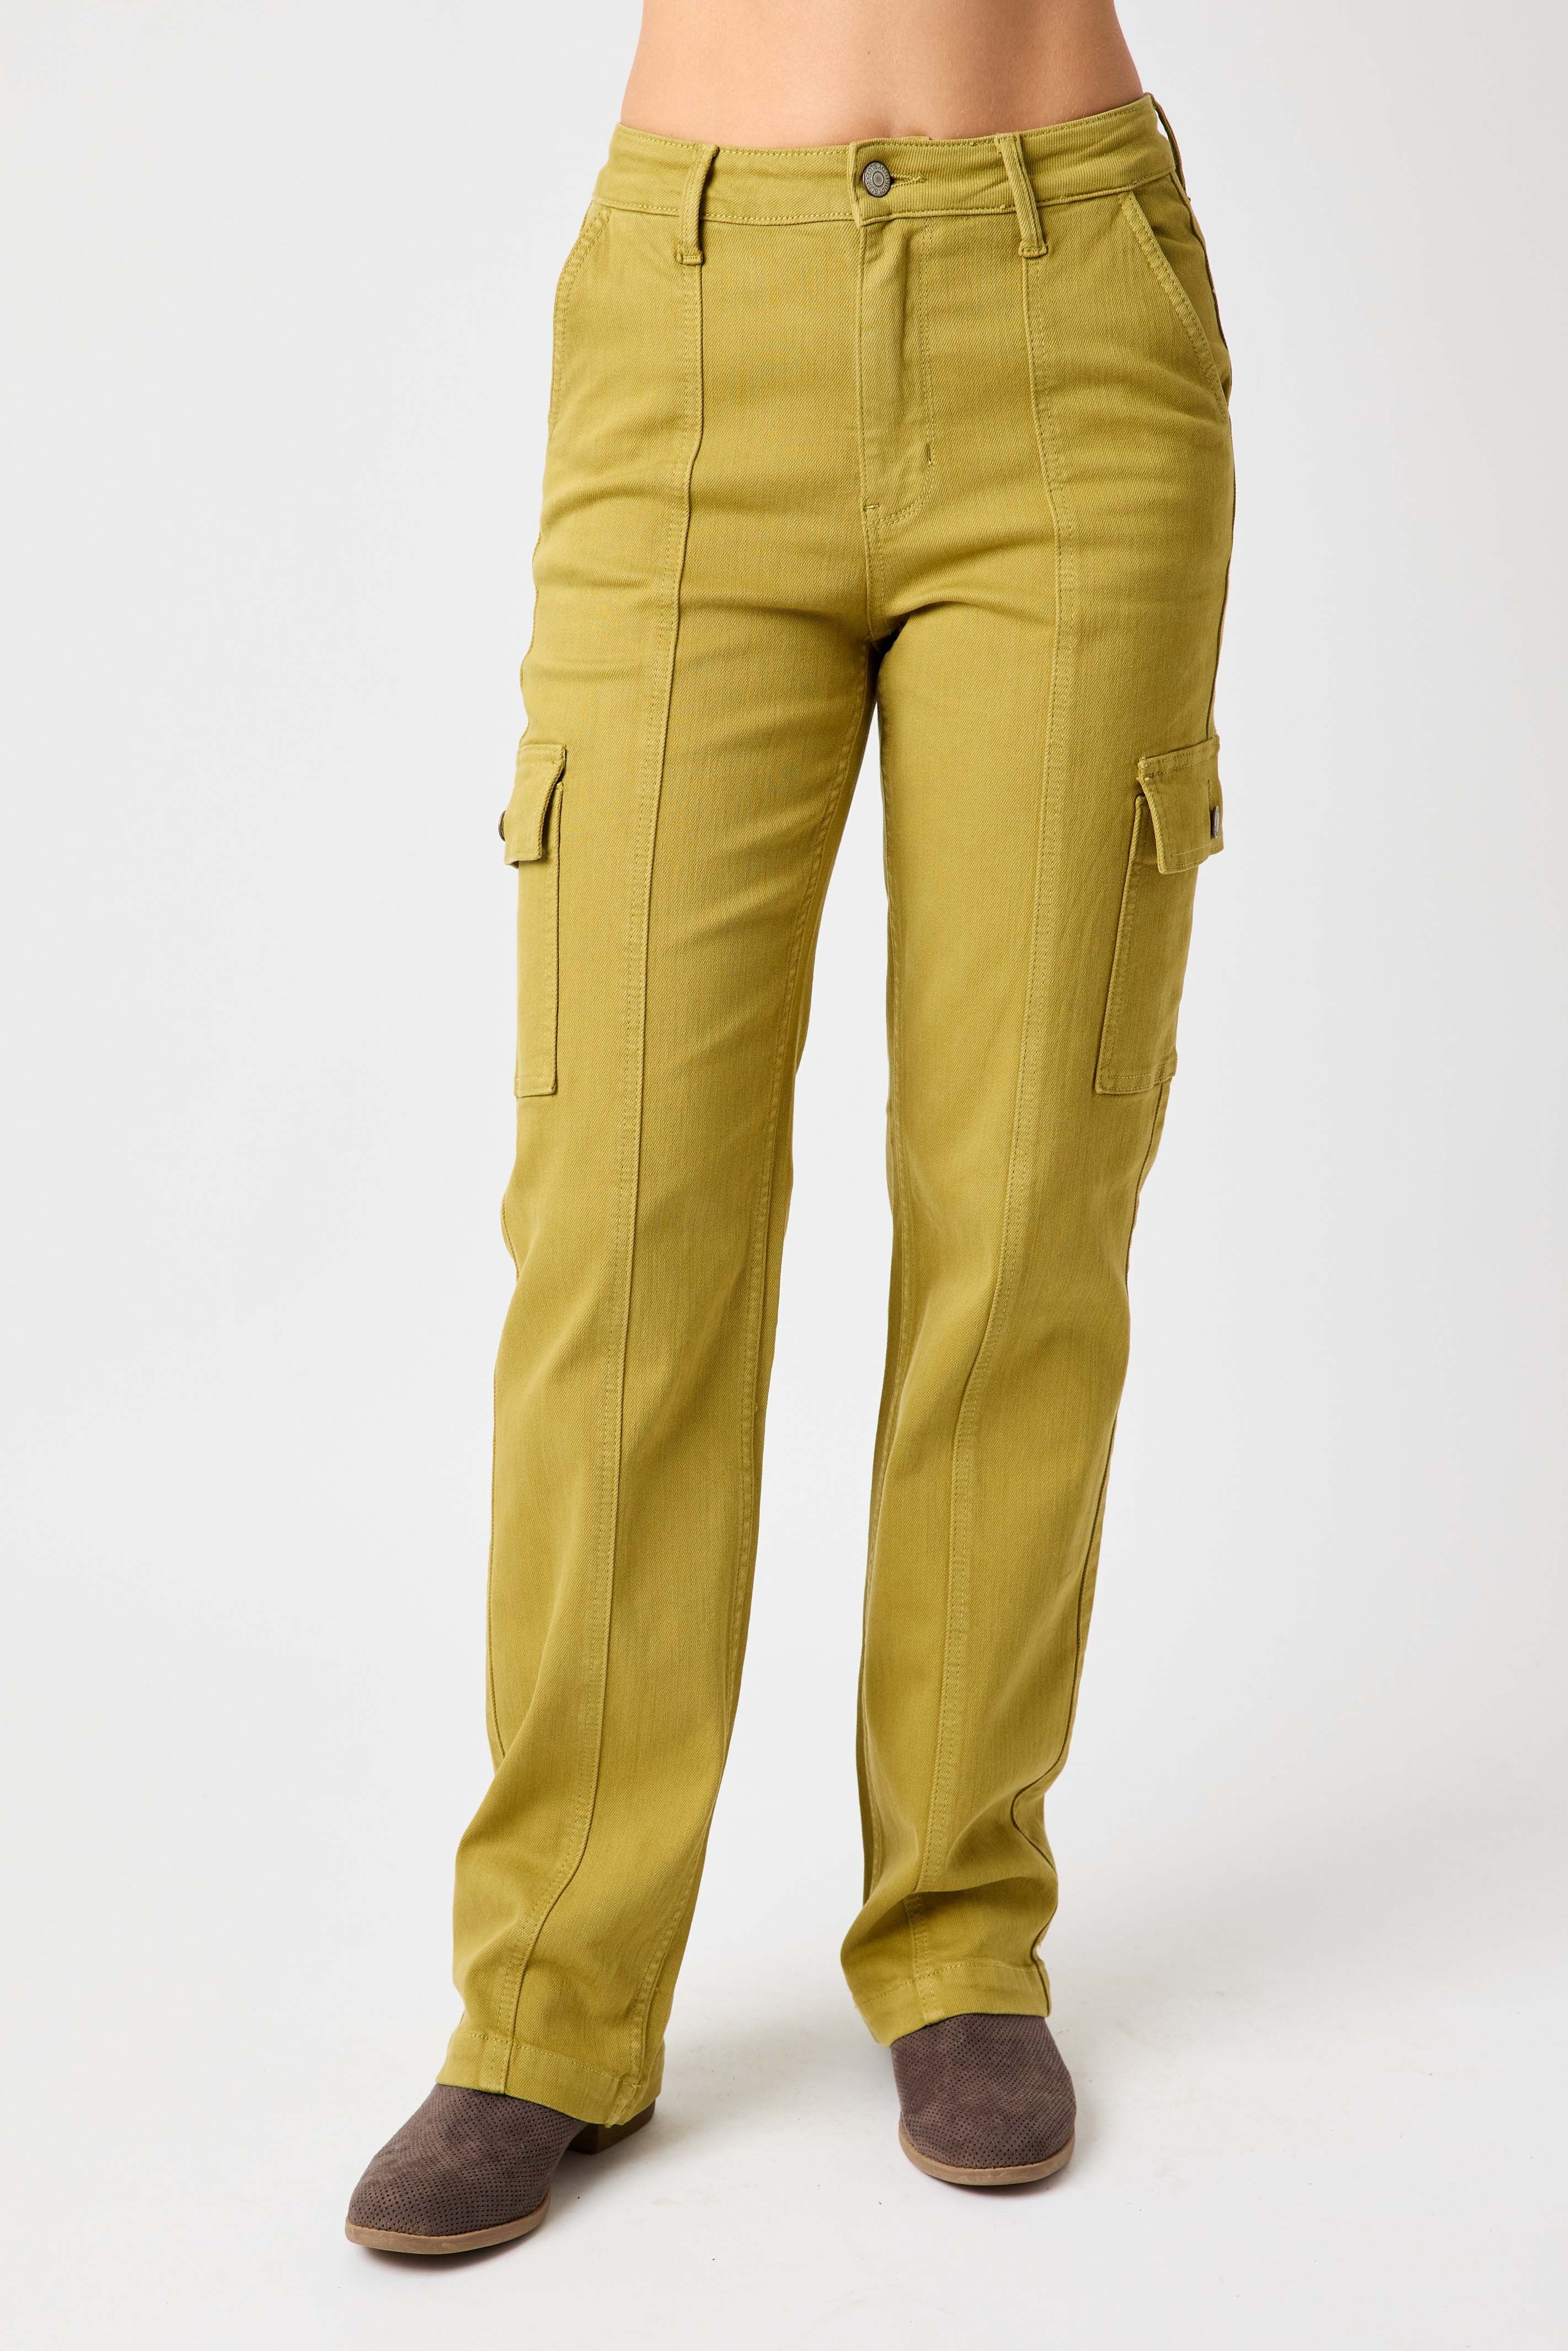 Judy Blue Matcha Doin' Cargo Jeans JB Boutique Simplified